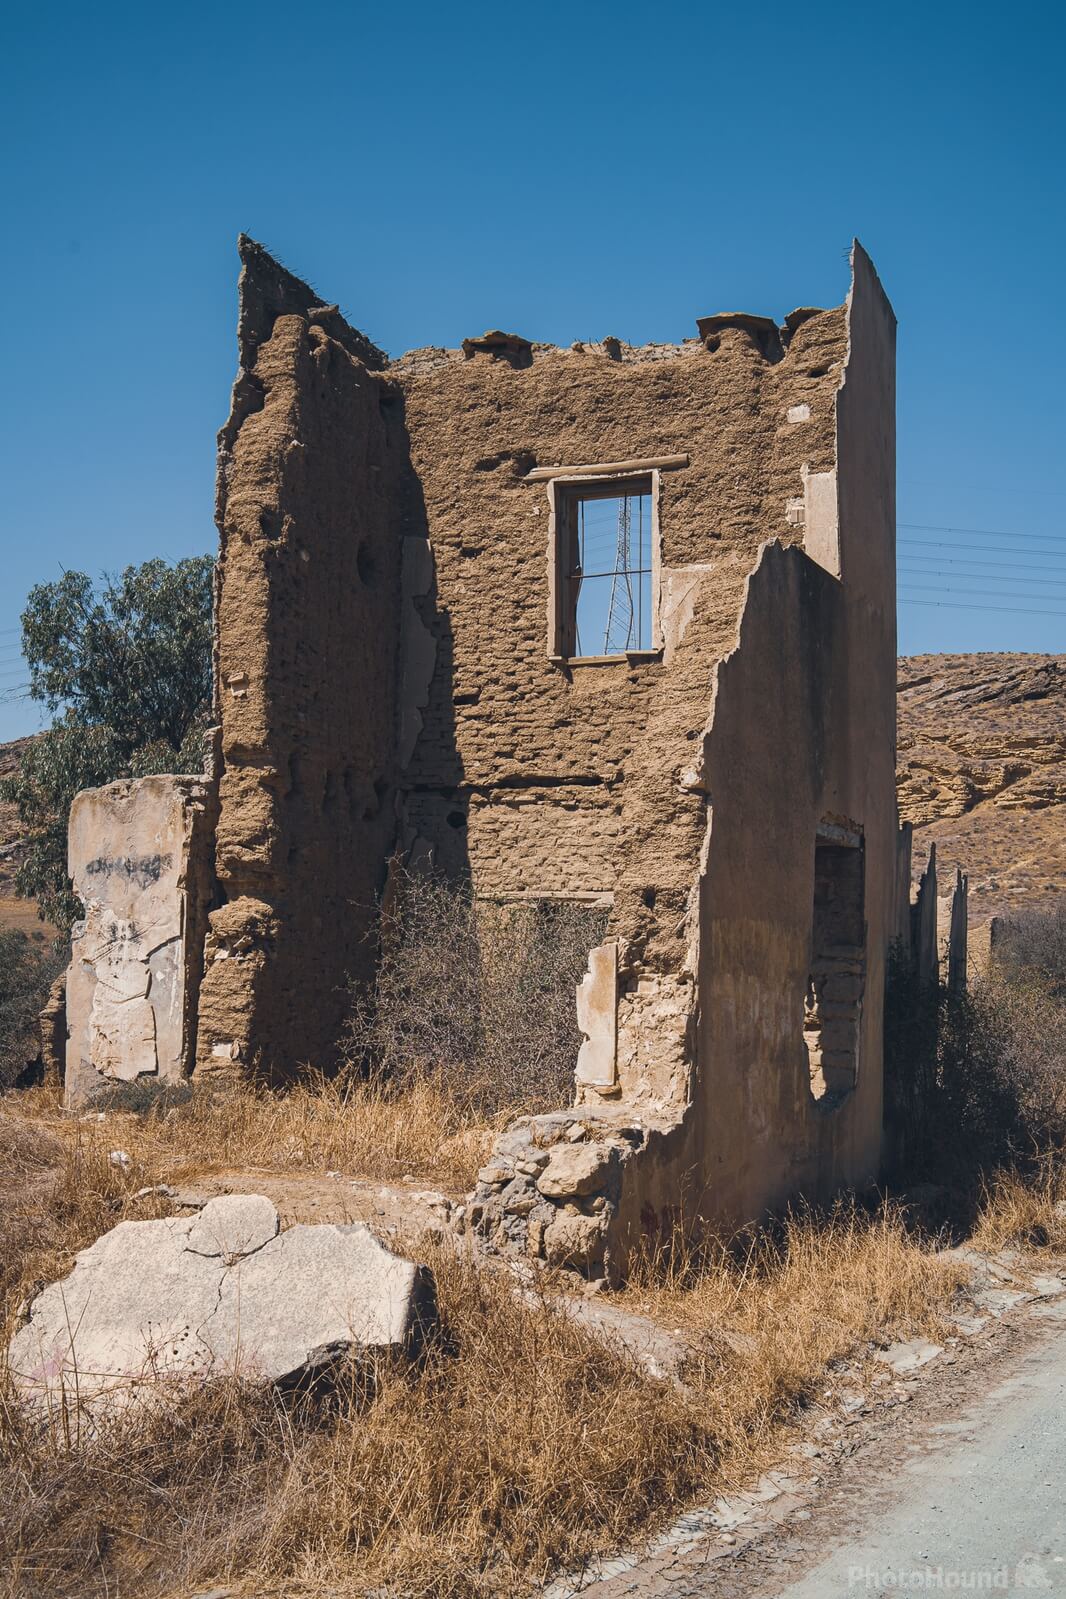 Image of Agios Sozomenos by James Billings.